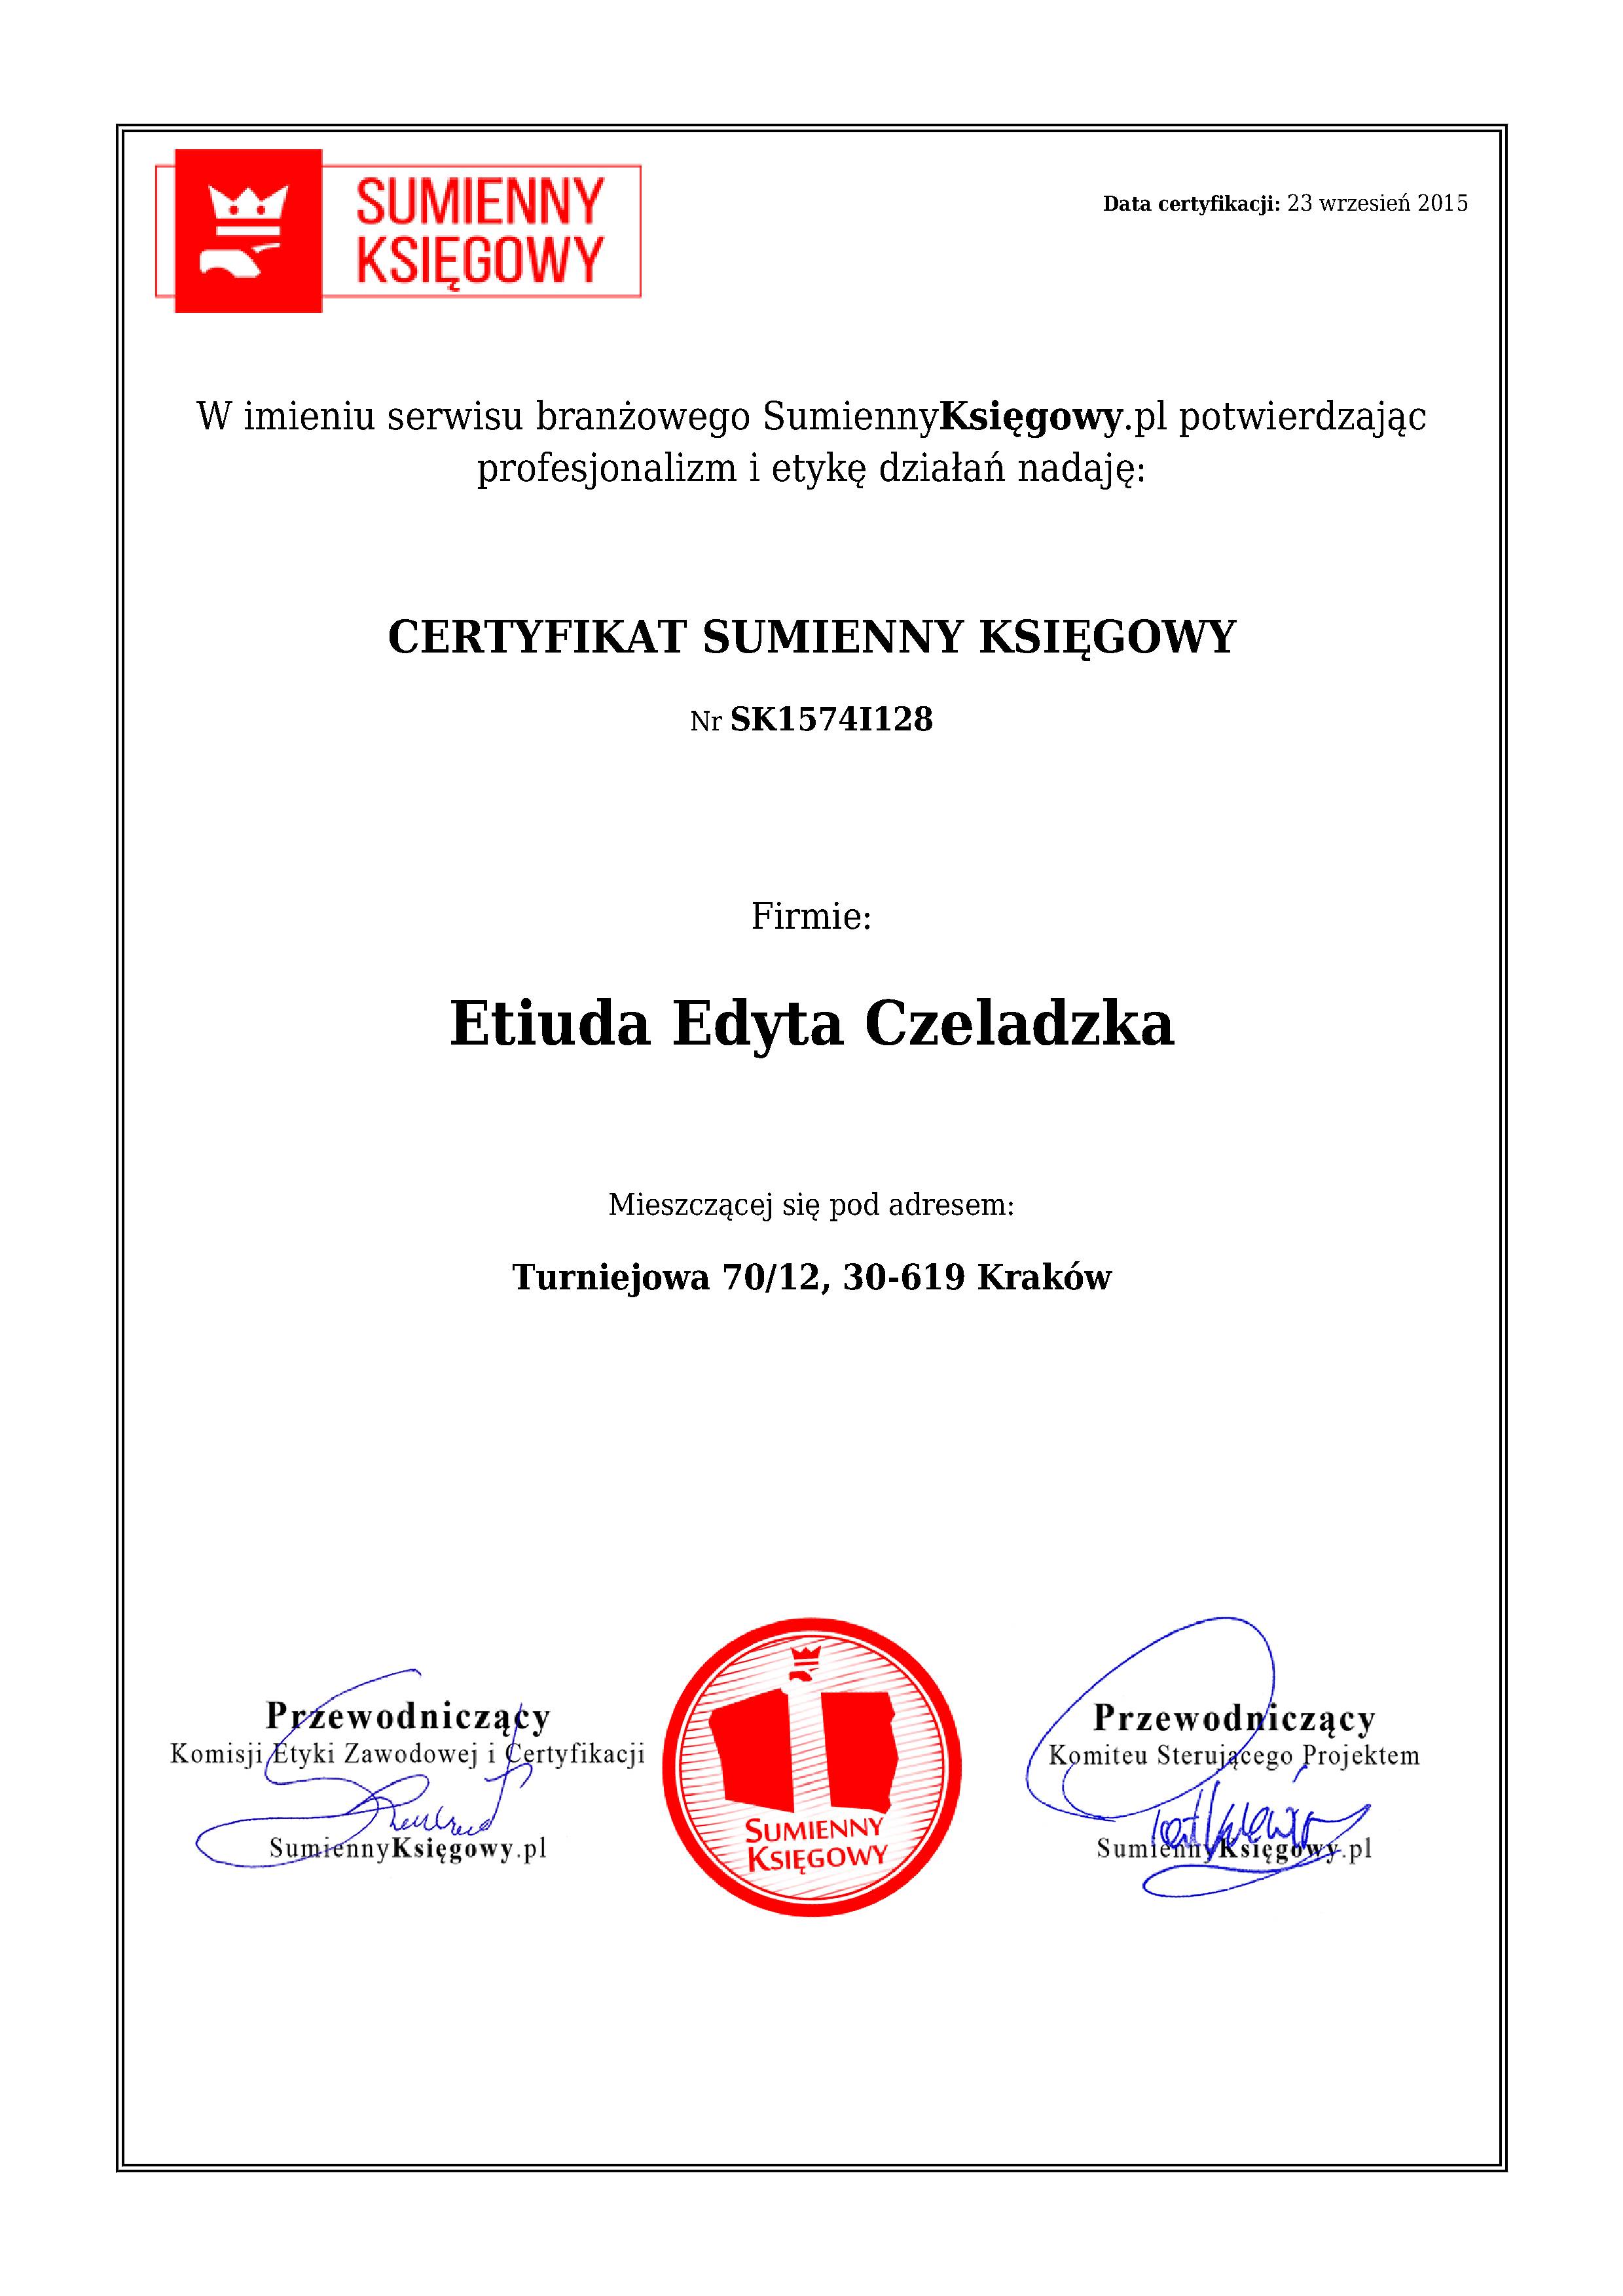 Etiuda Edyta Czeladzka certyfikat 1